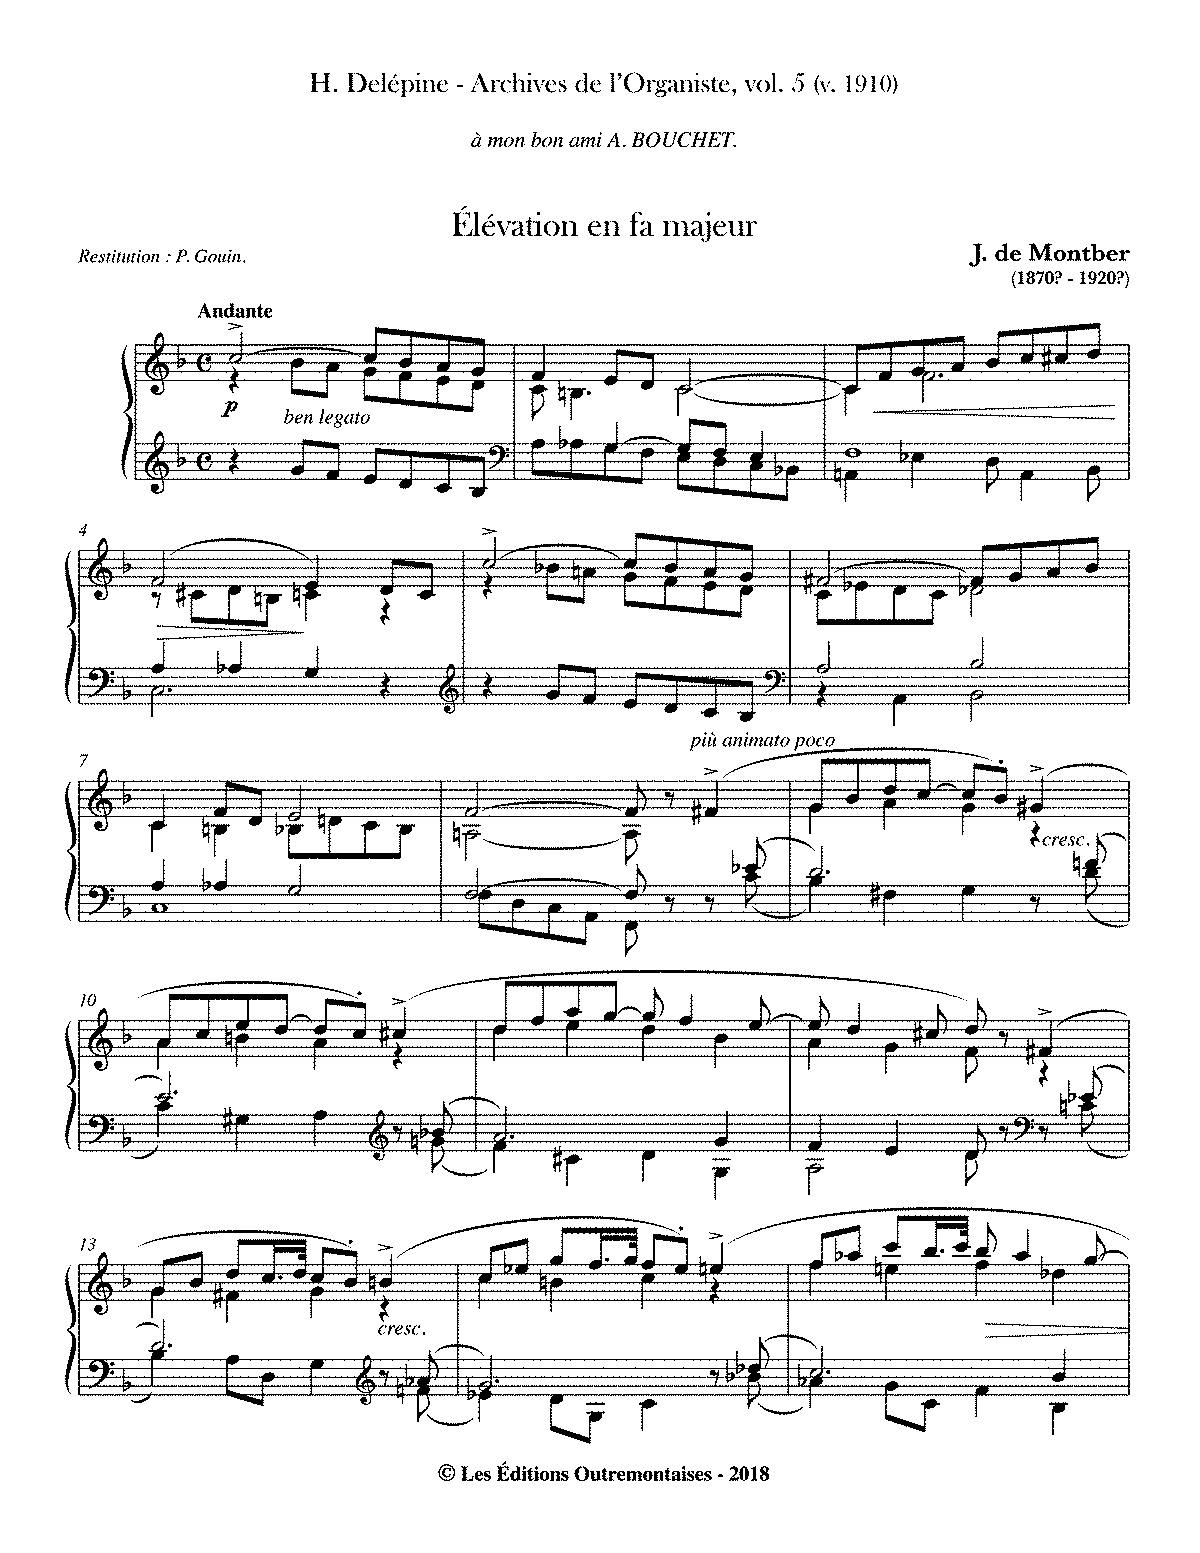 Élévation in F major (Montber, J. de) - IMSLP